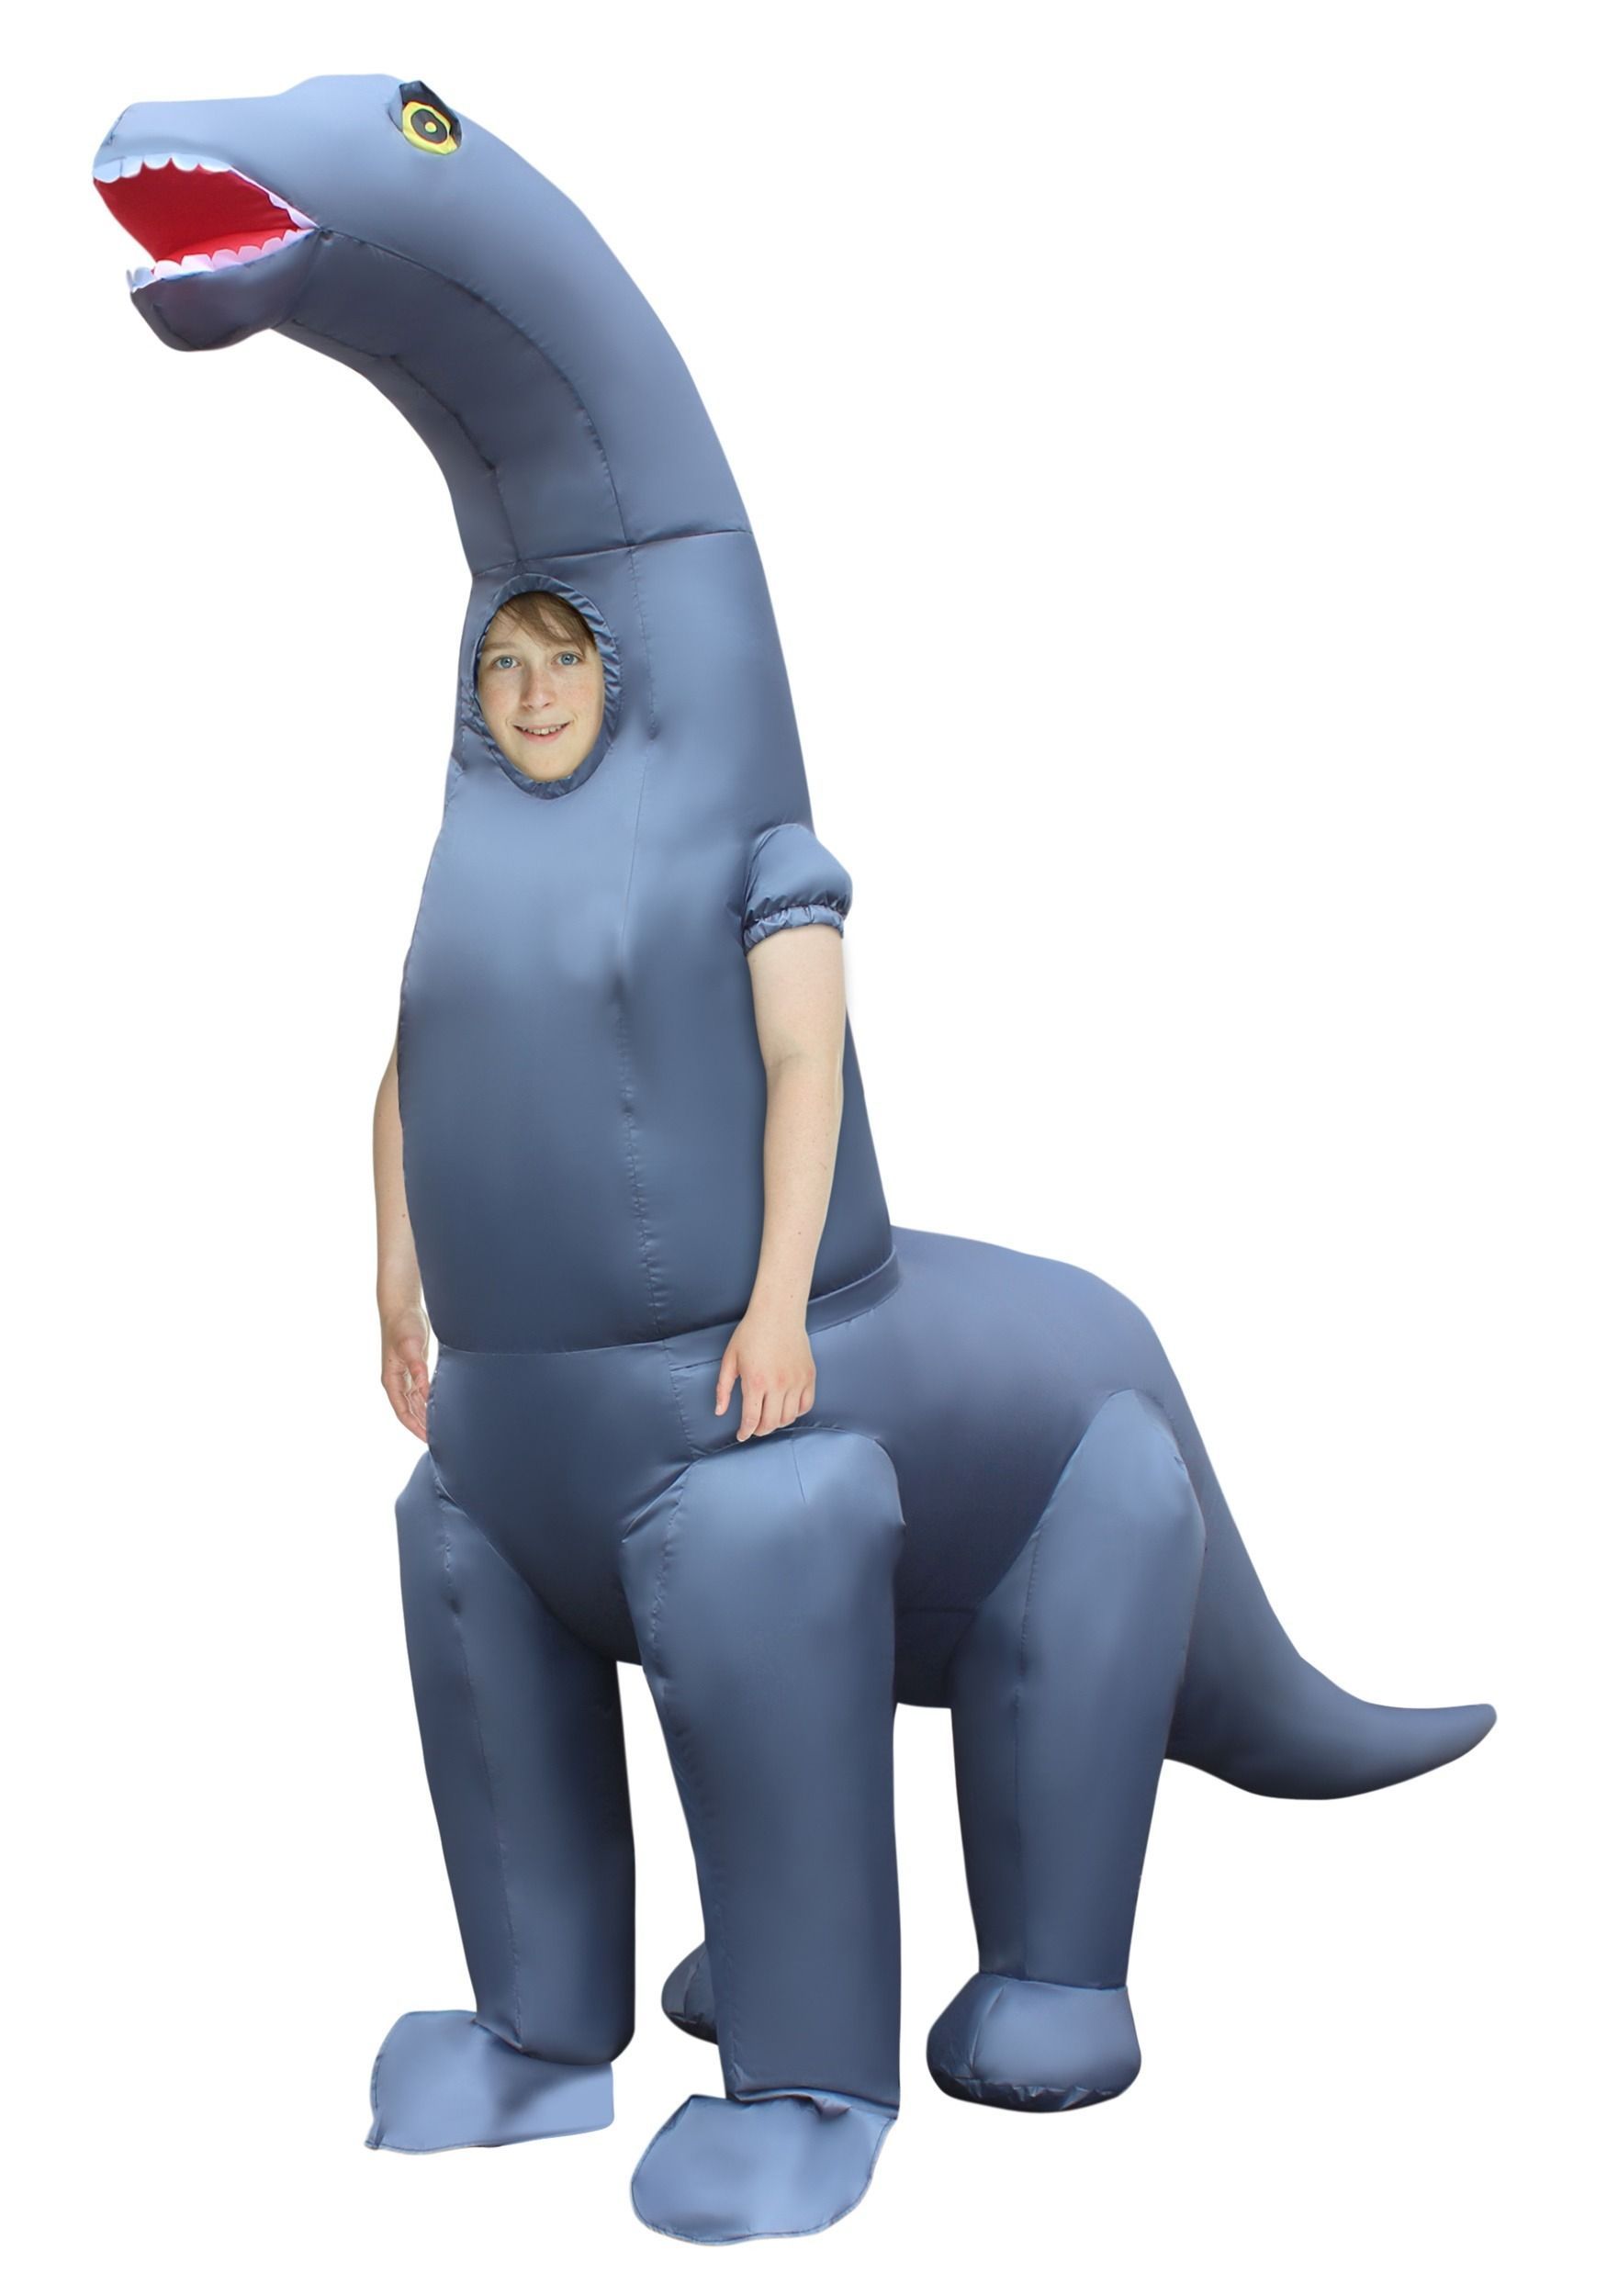 Image result for Brontosaurus child's costume